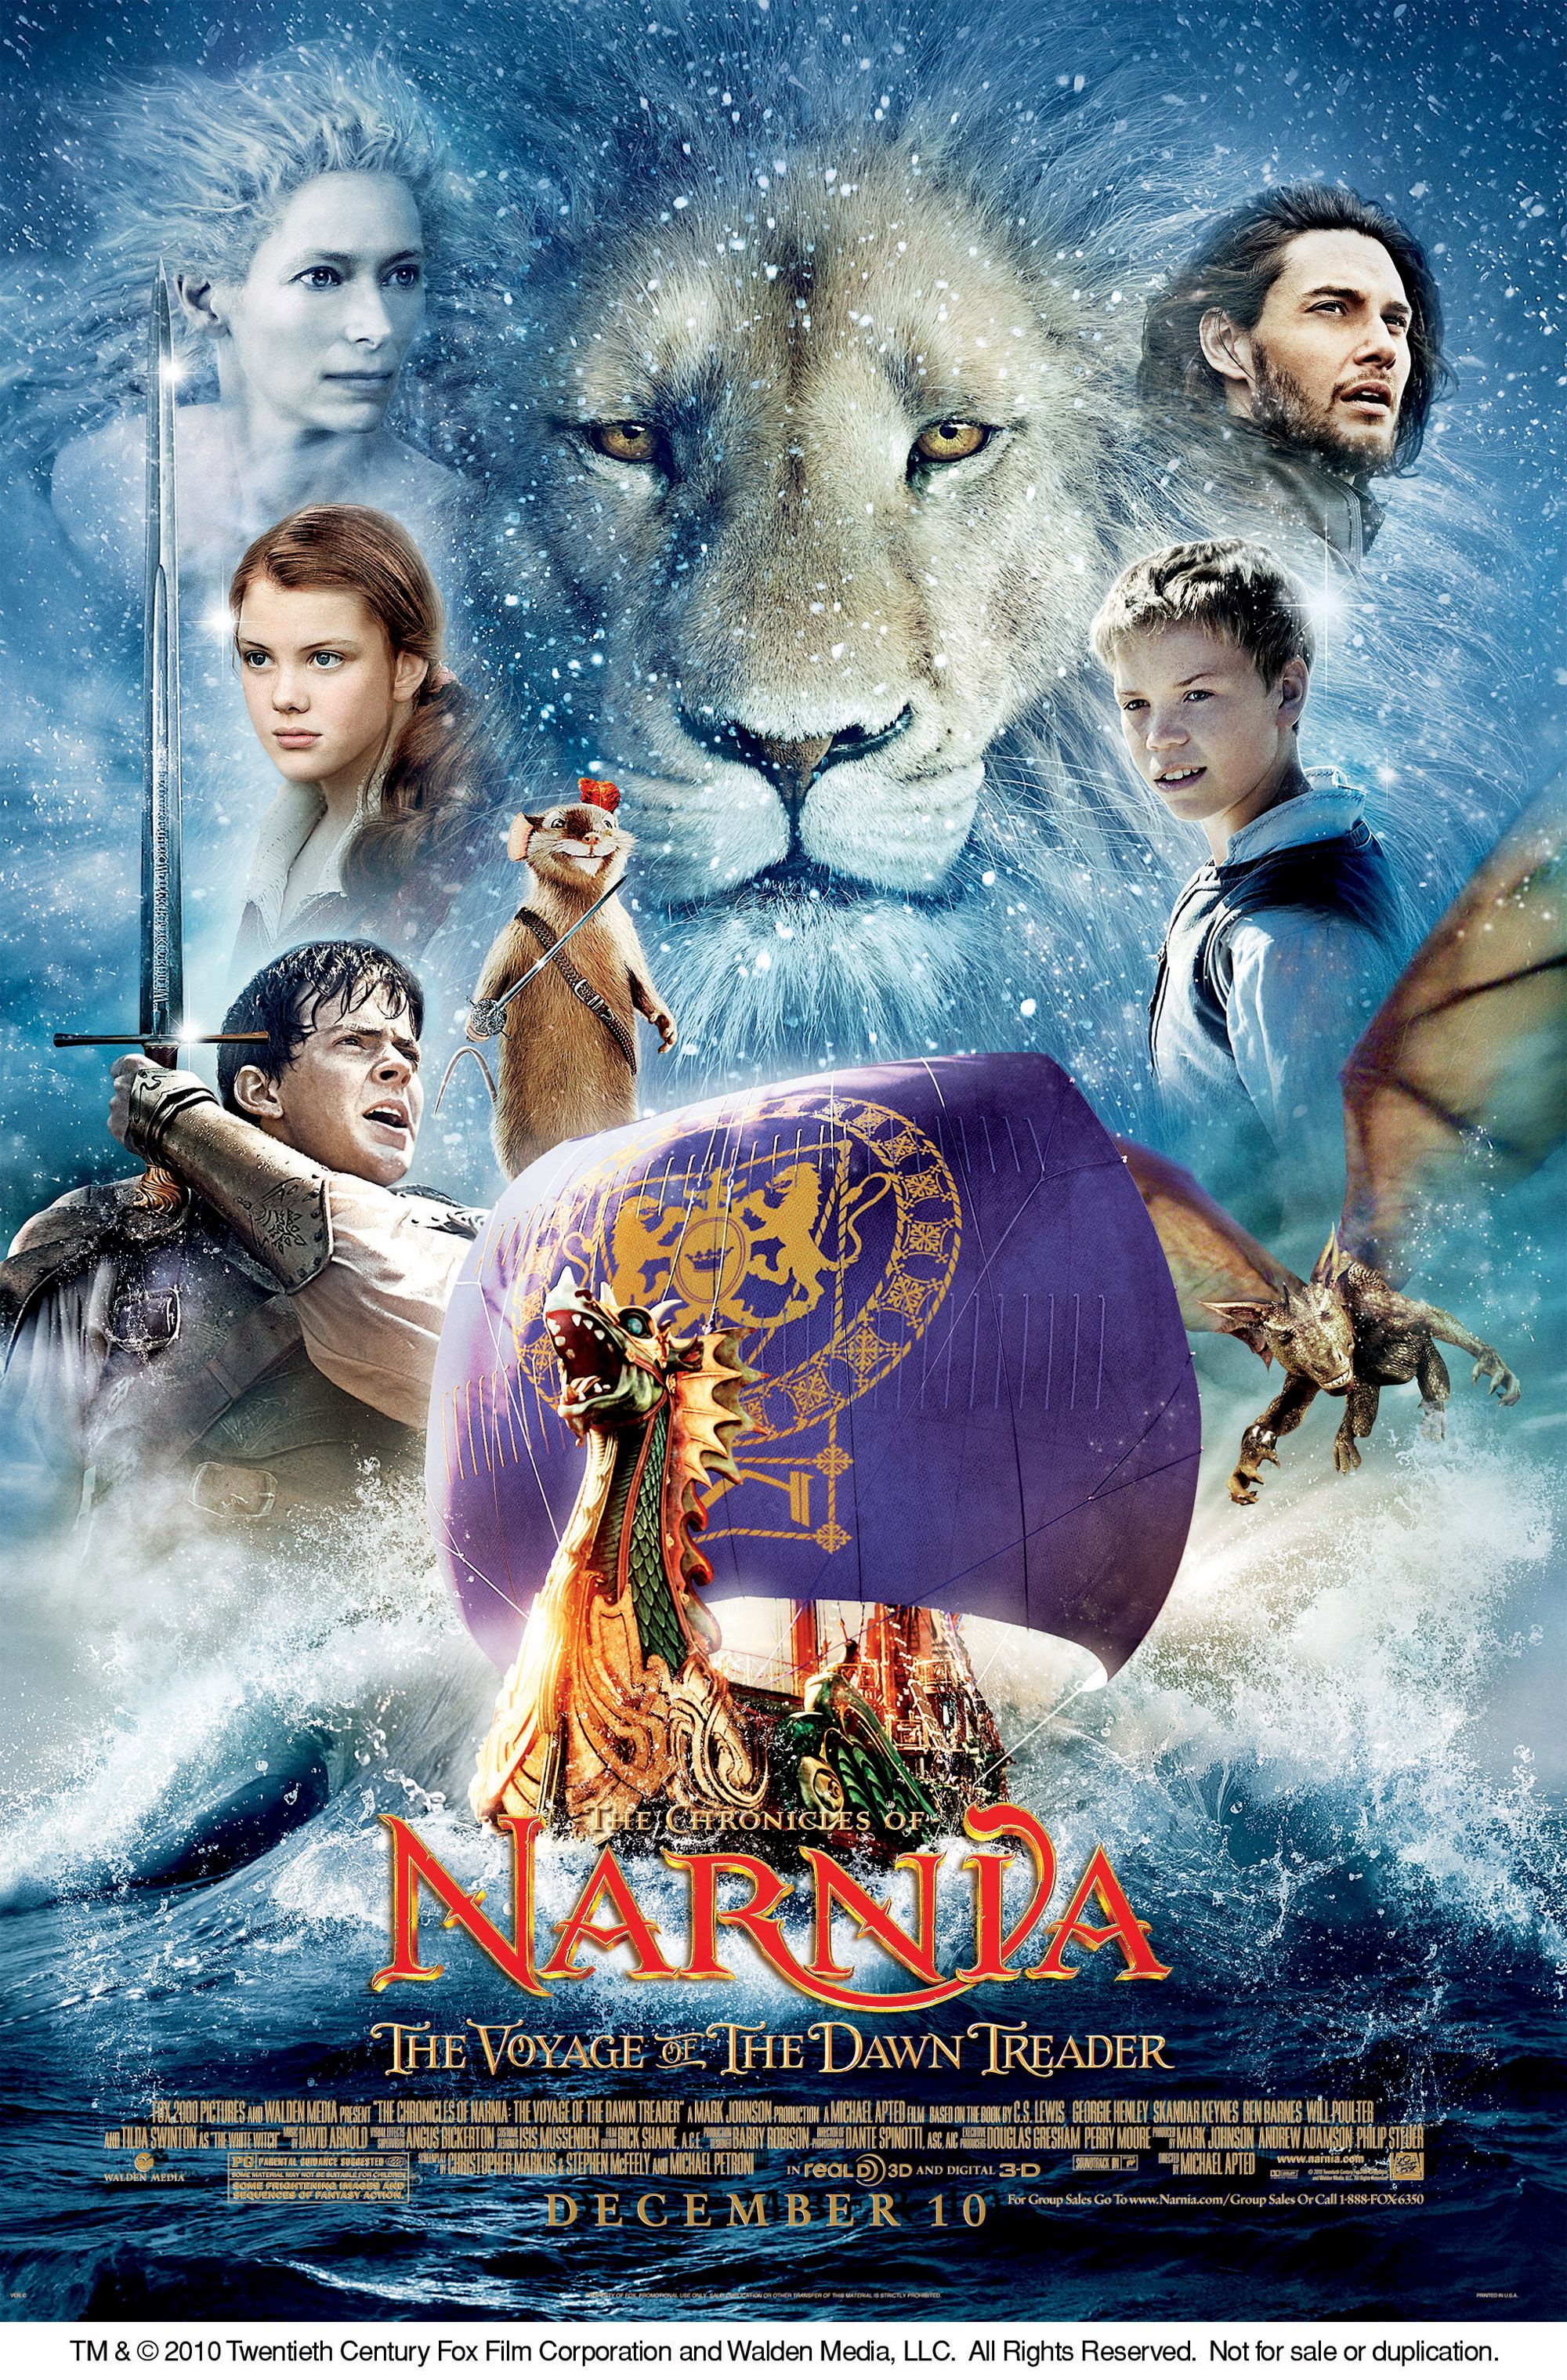 The chronicles of narnia: prince caspian (2008) imdb.